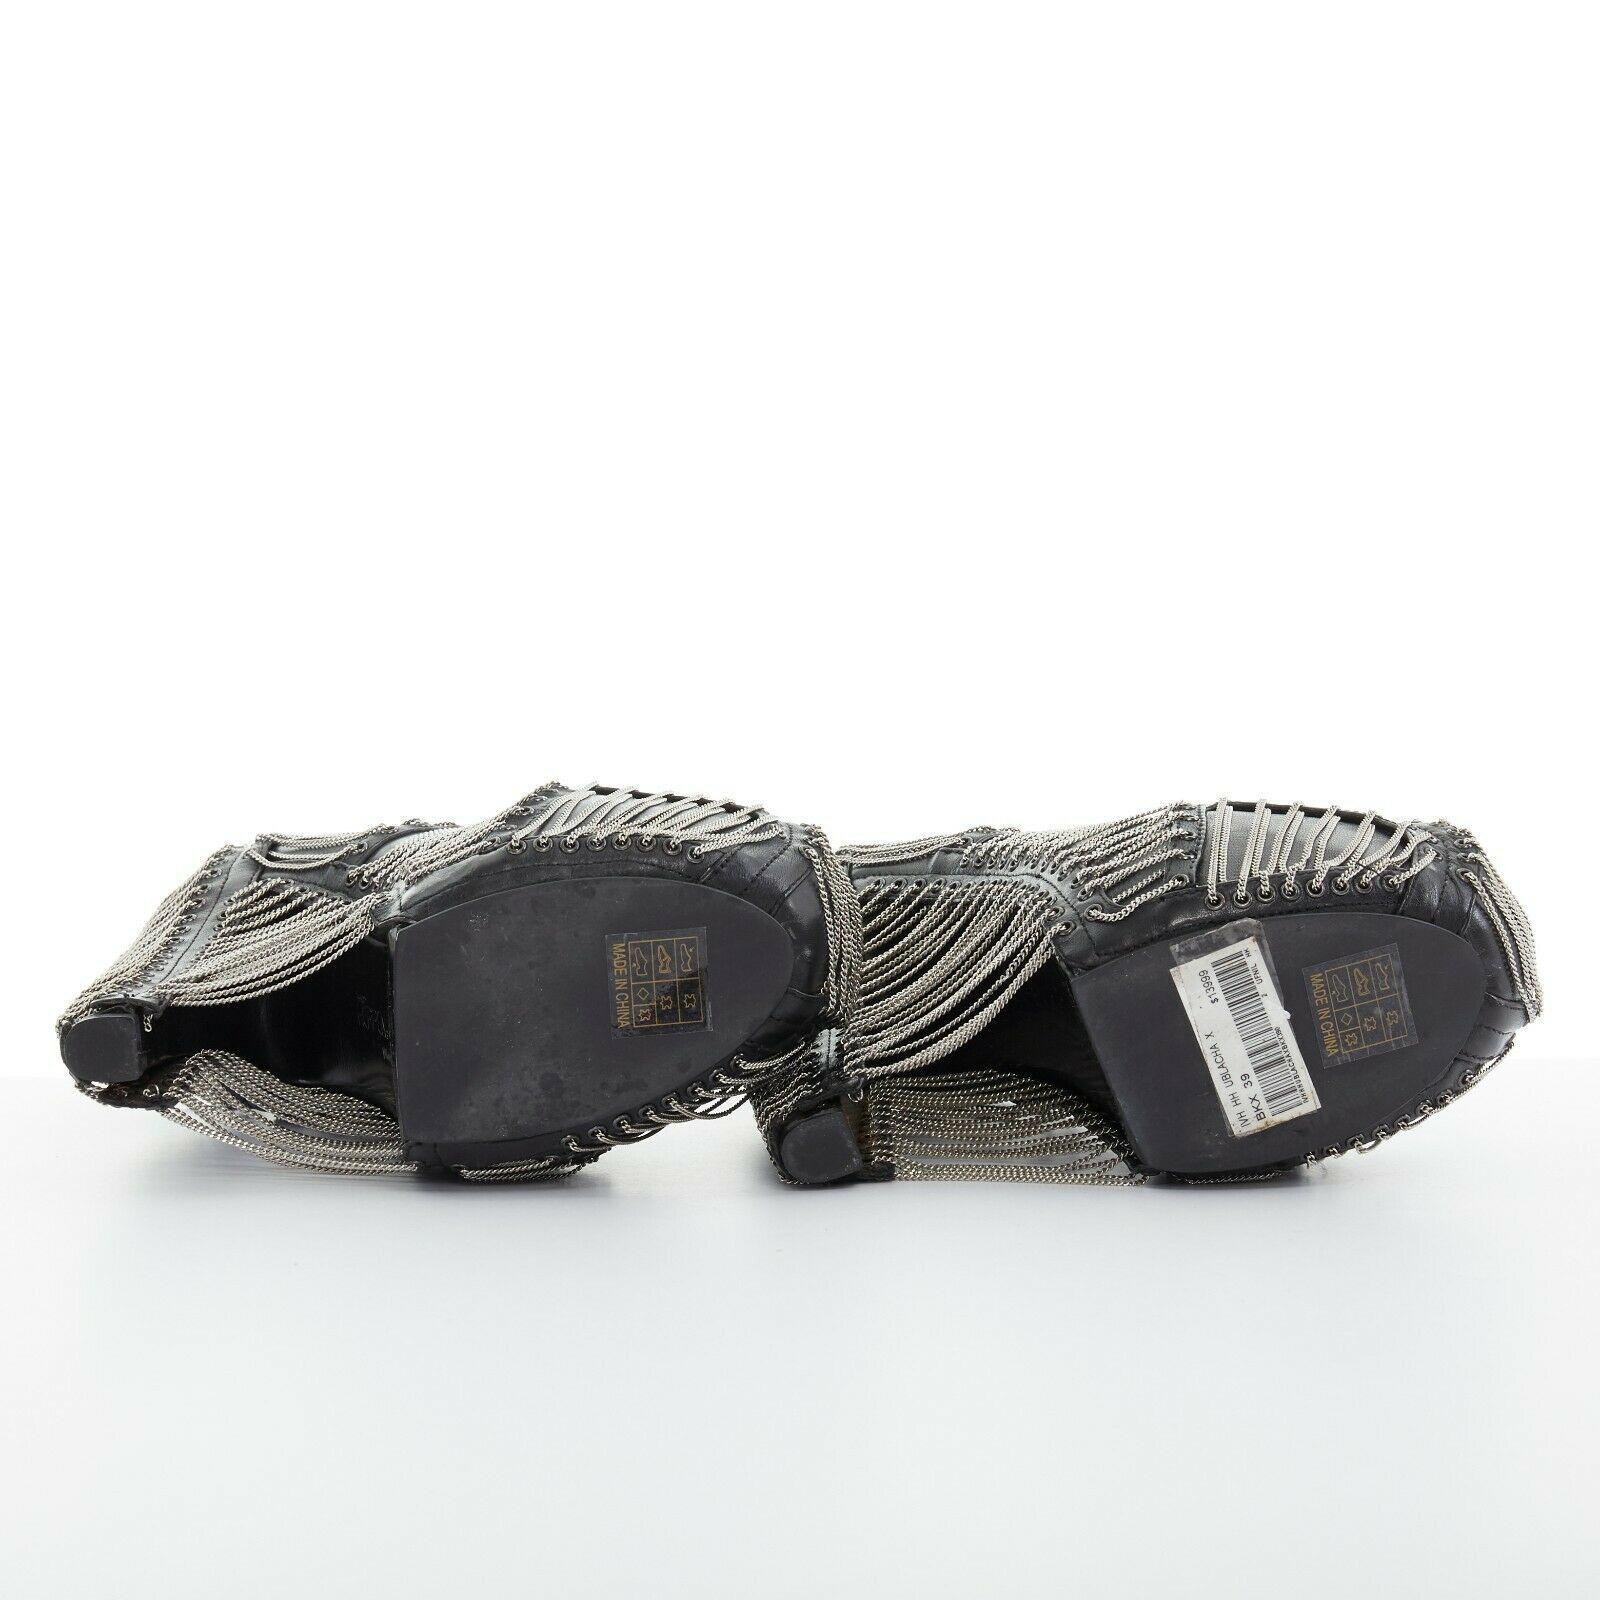 Black new IRIS VAN HERPEN UNITED NUDE black silver chain platform ankle boot heel EU39